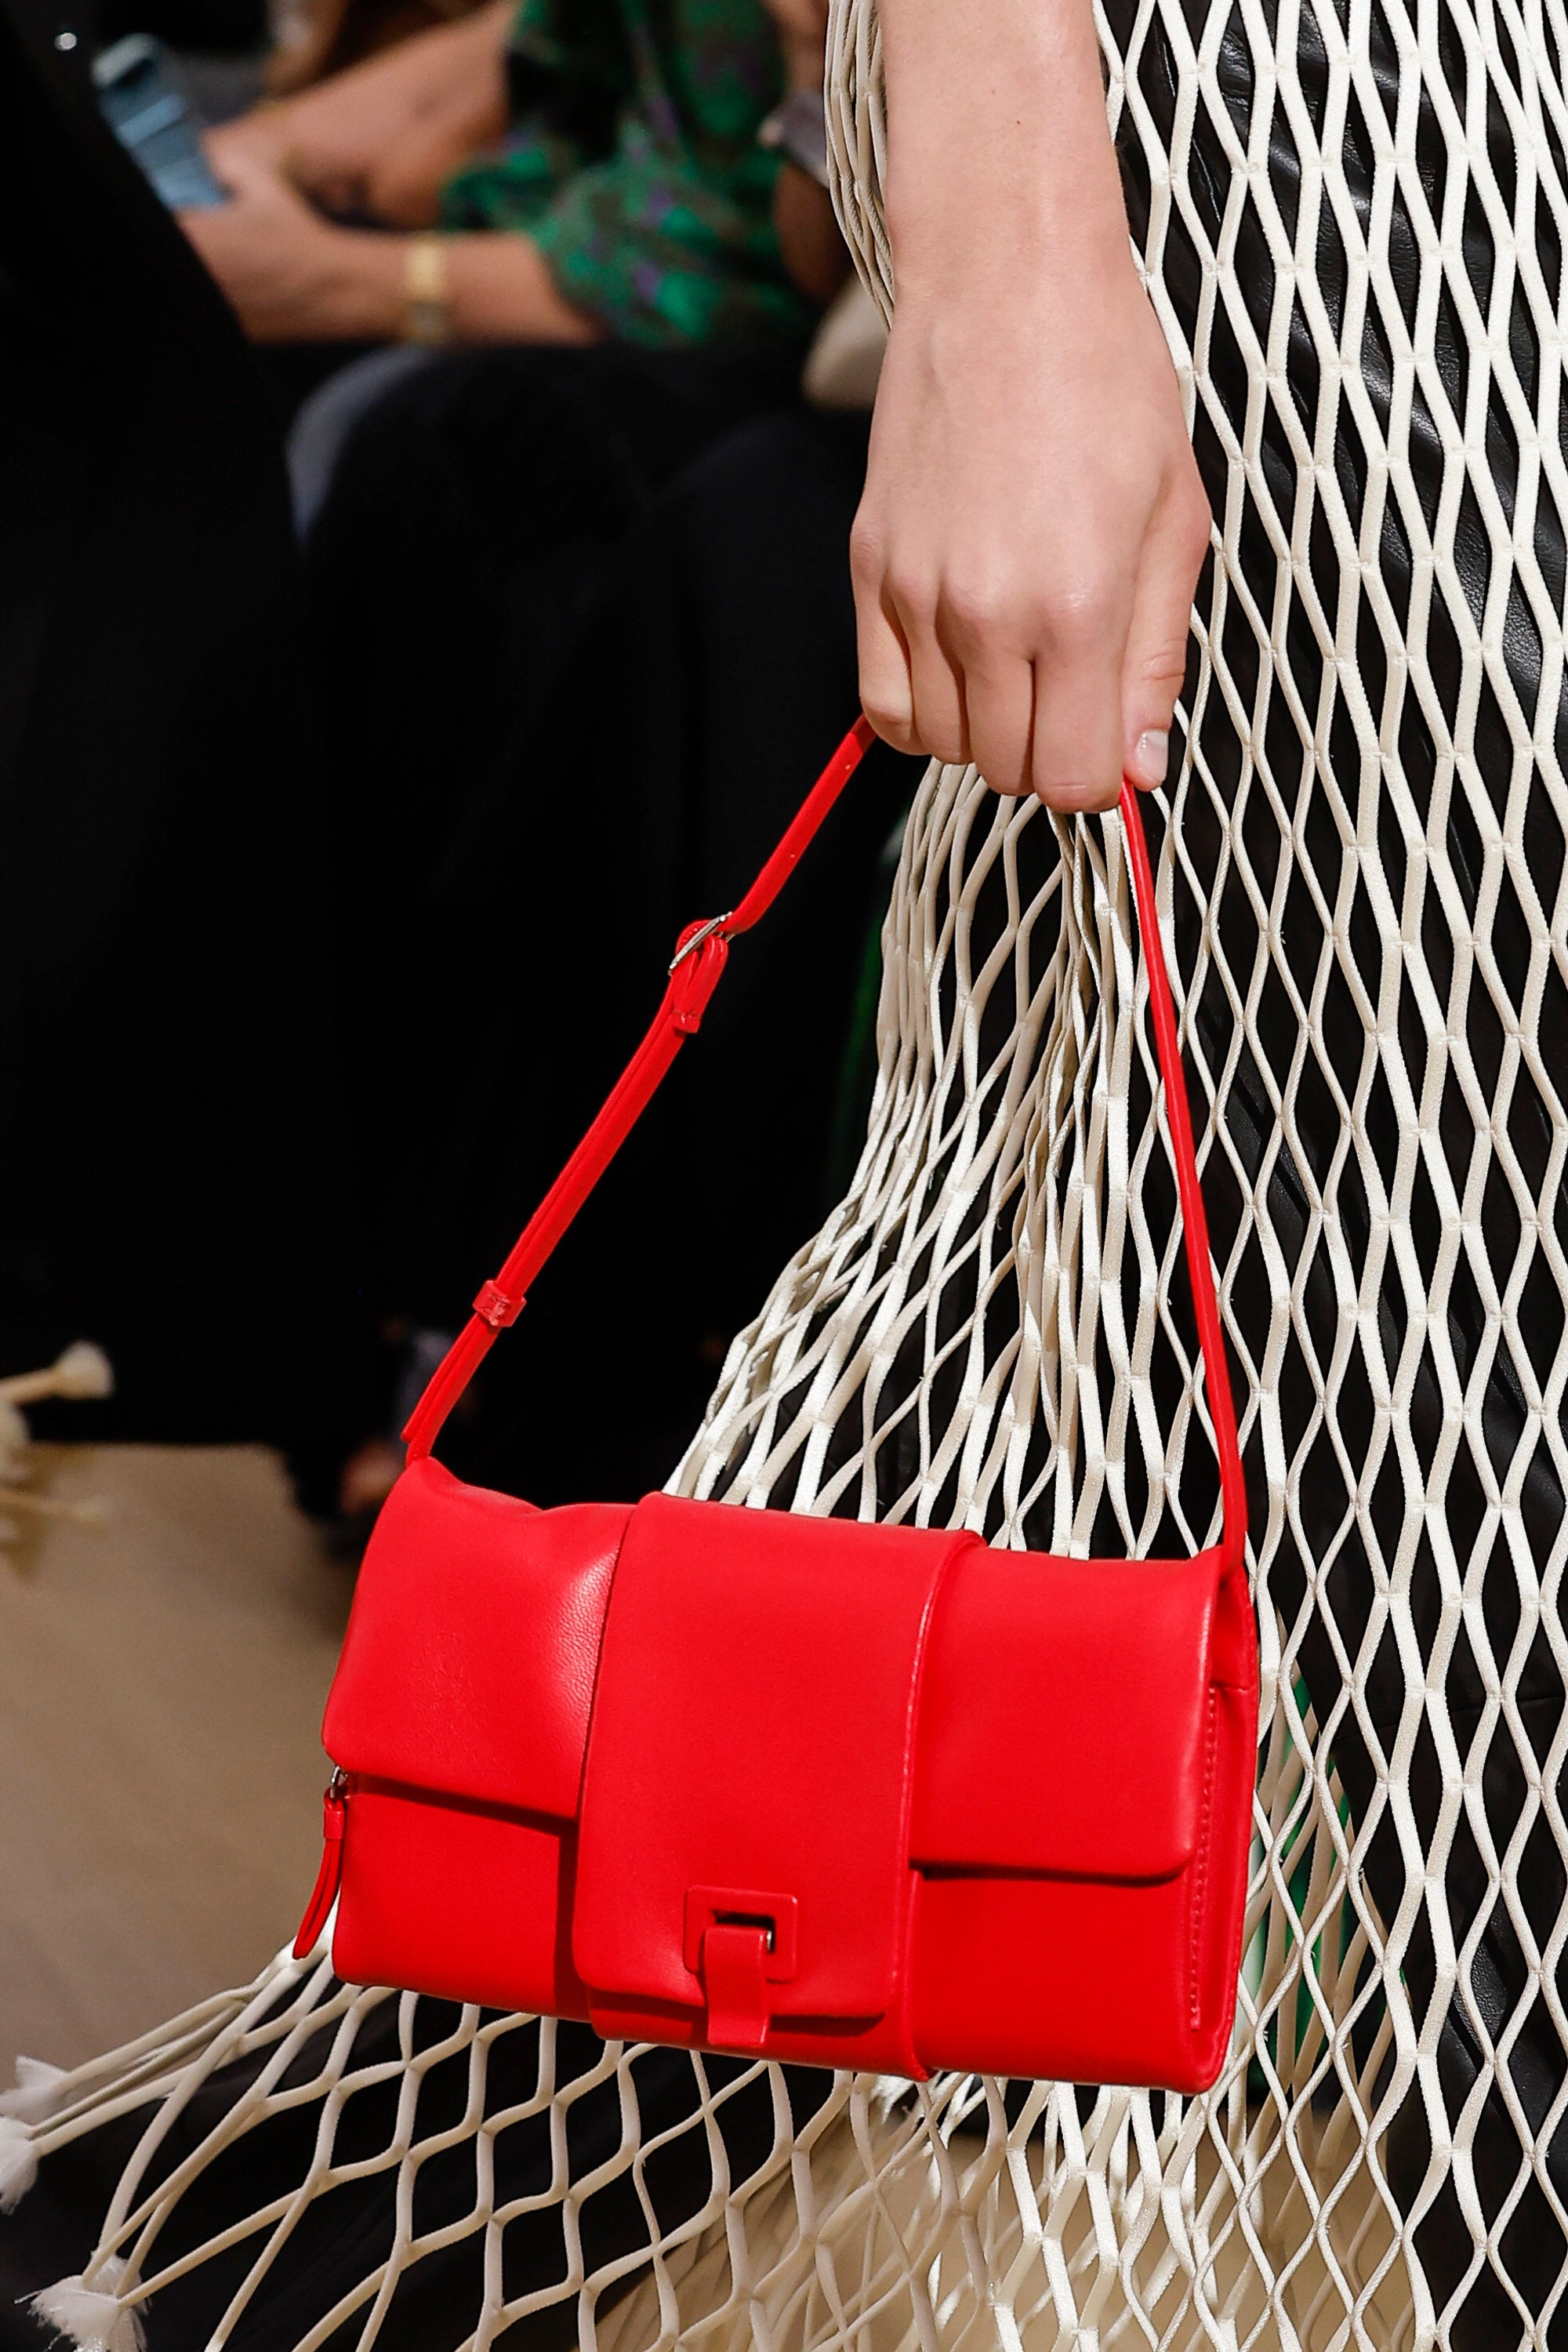 Protocol Travel Bag Red Luggage Carry On Canvas Shoulder Strap Zipper | eBay